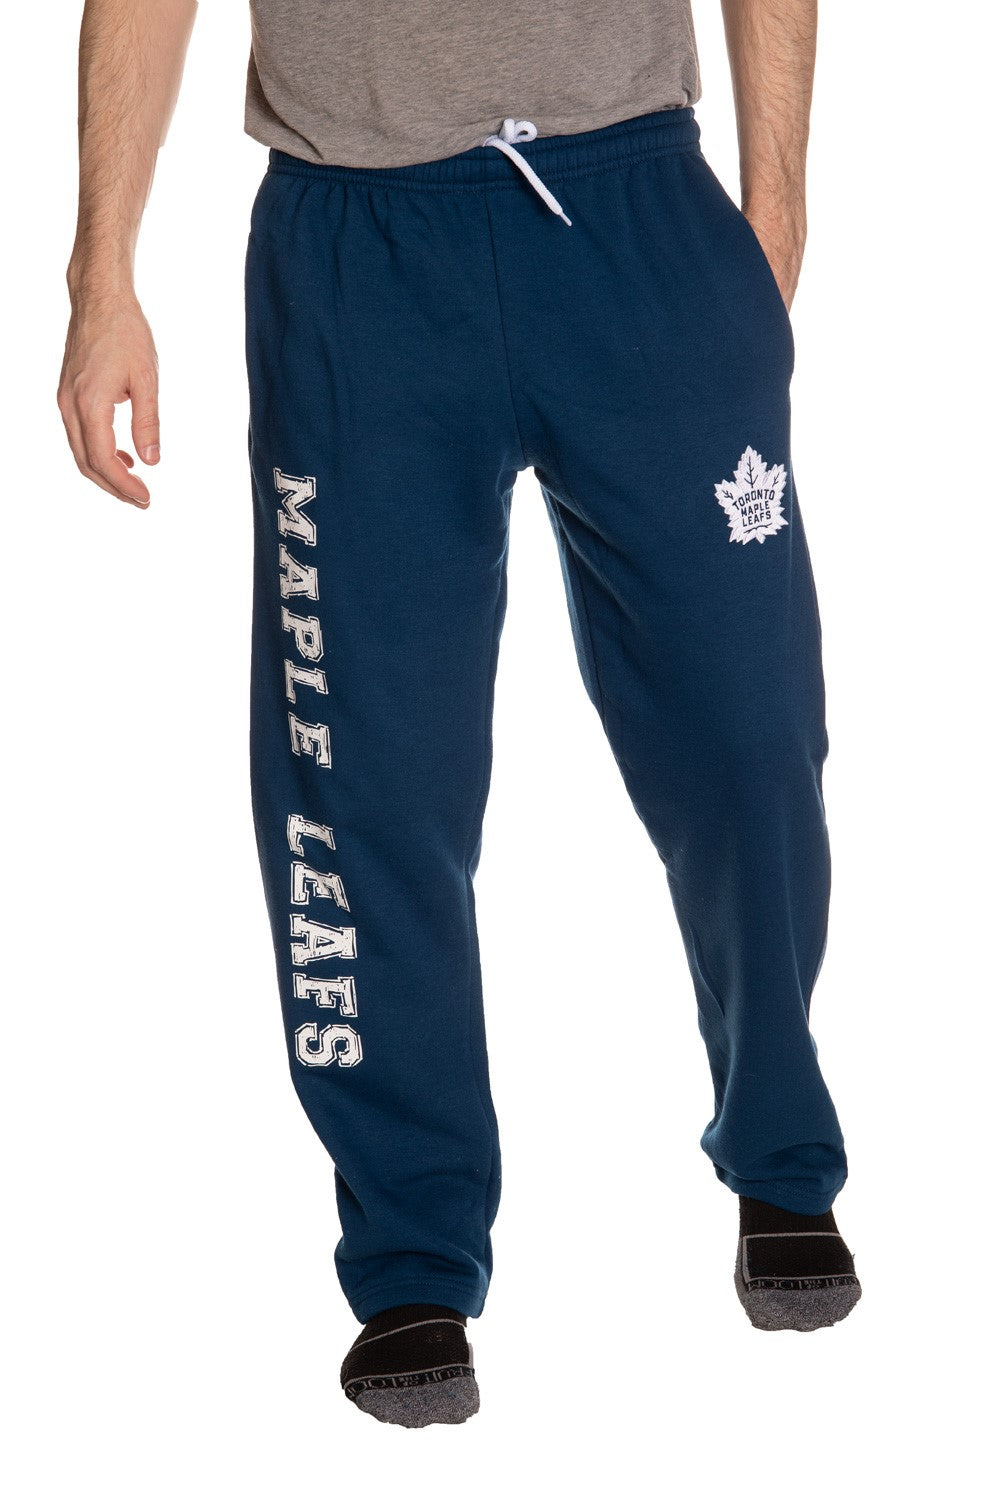 Toronto Maple Leafs Premium Fleece Sweatpants for Men